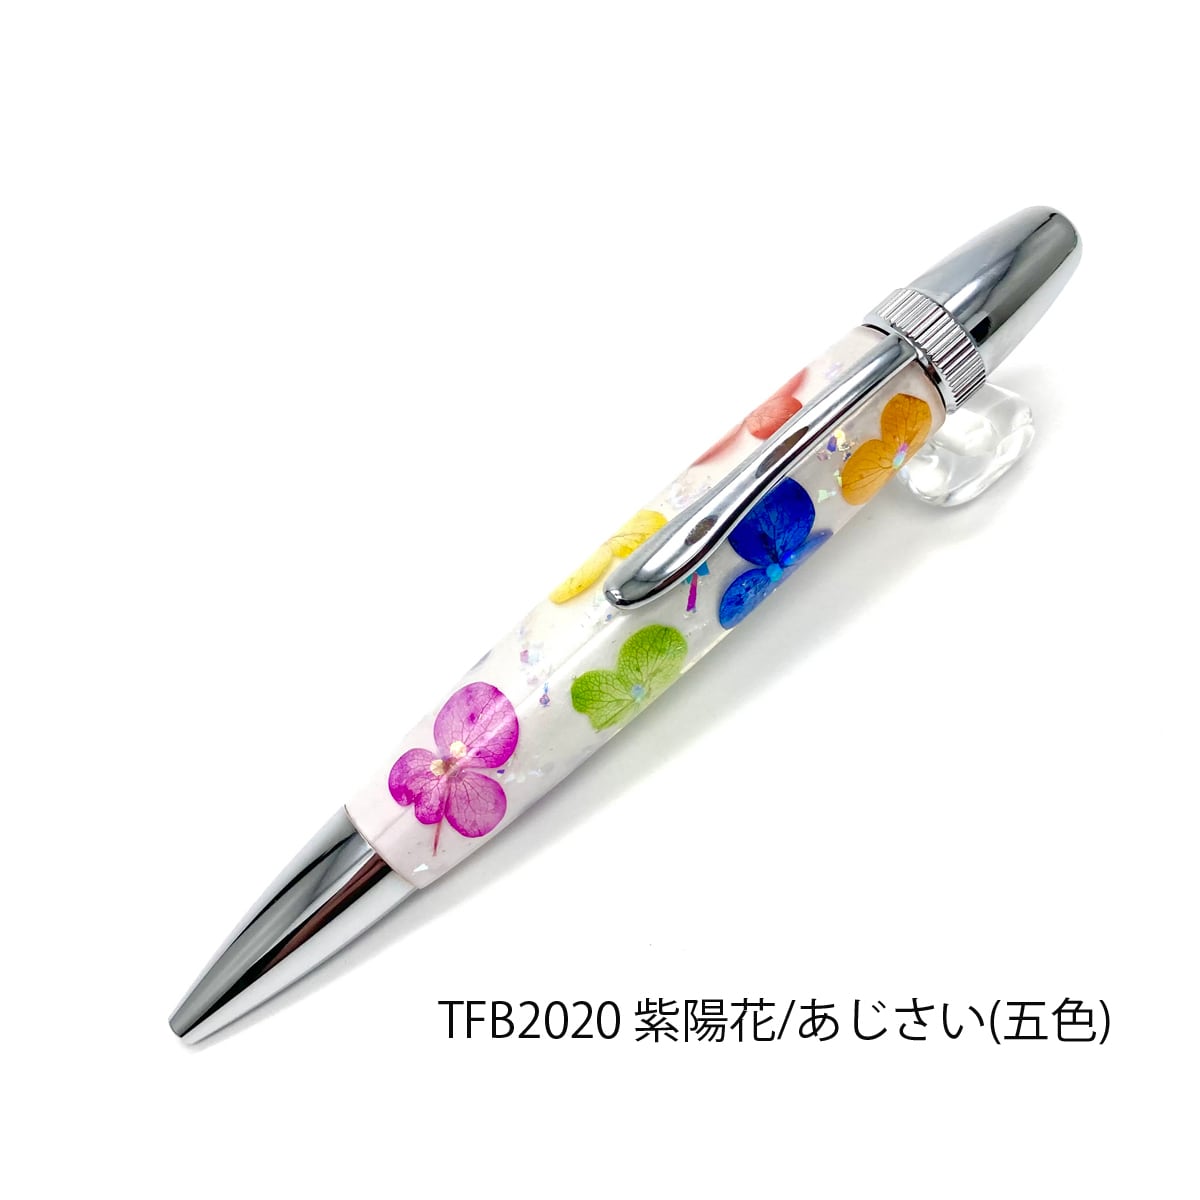 Flower Pen 紫陽花 /あじさい (五色) TFB2020 pa PARKER type